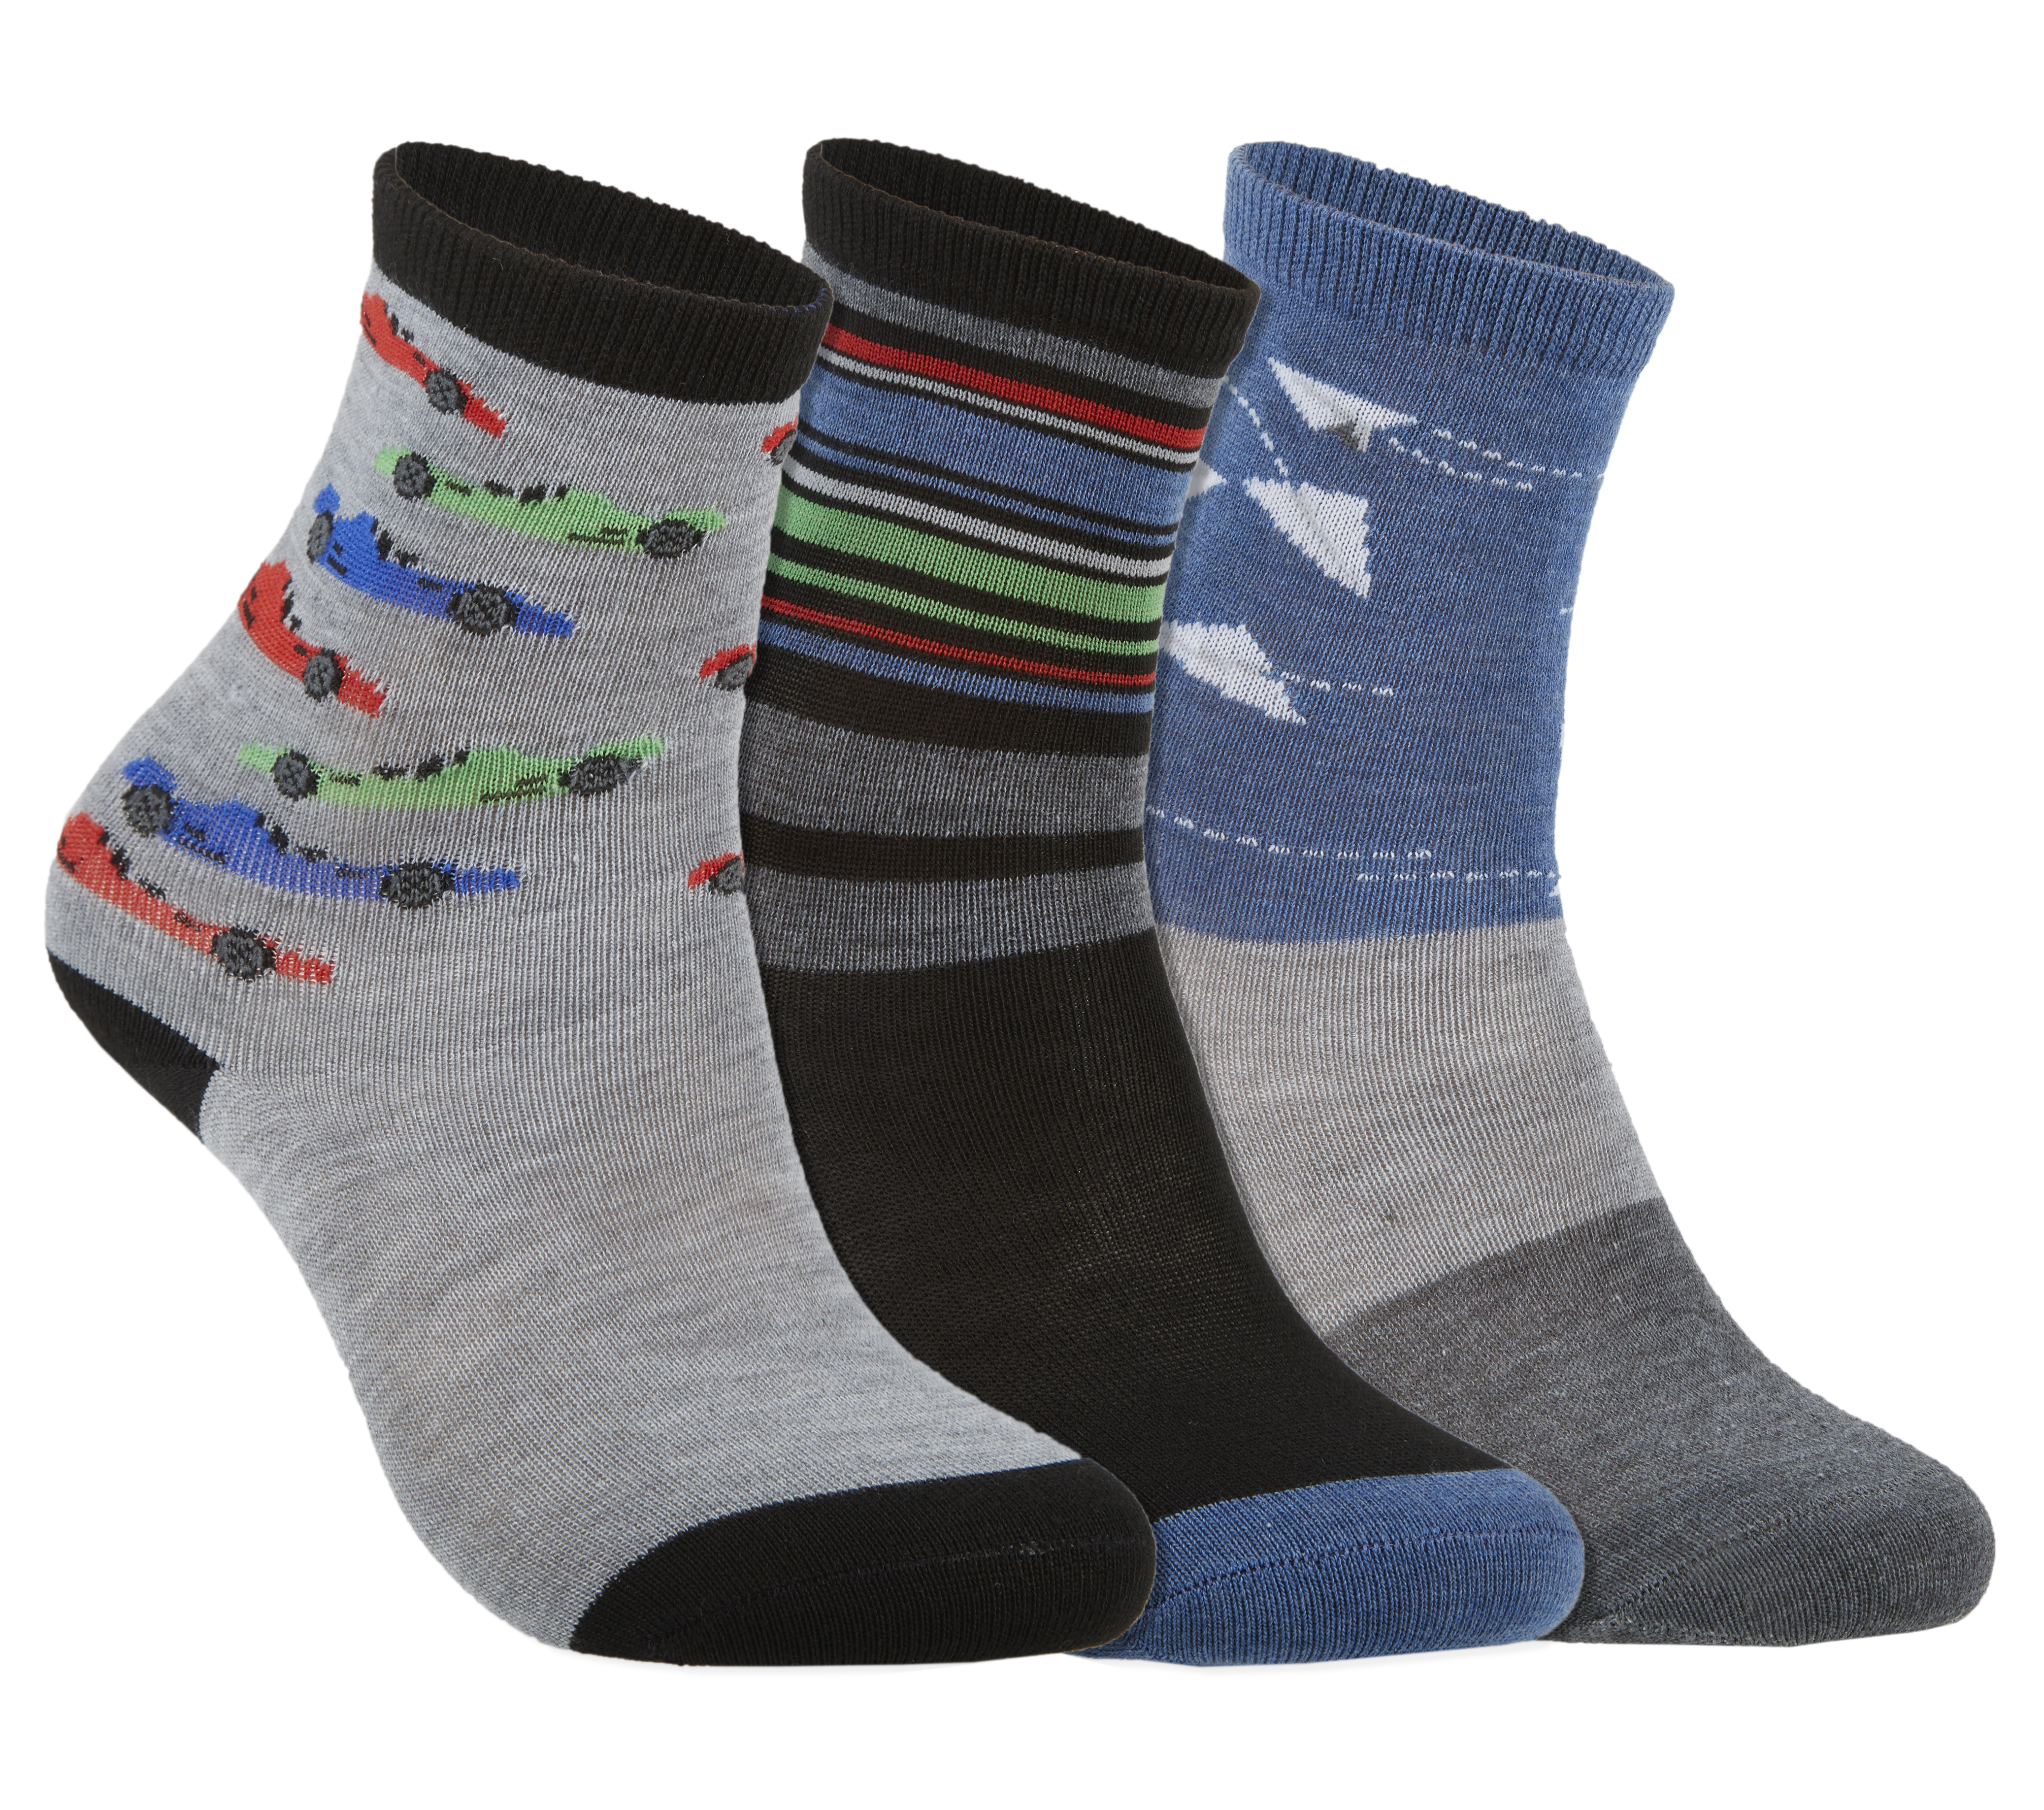 Shop the 3 Pack Super Soft Crew Socks | SKECHERS